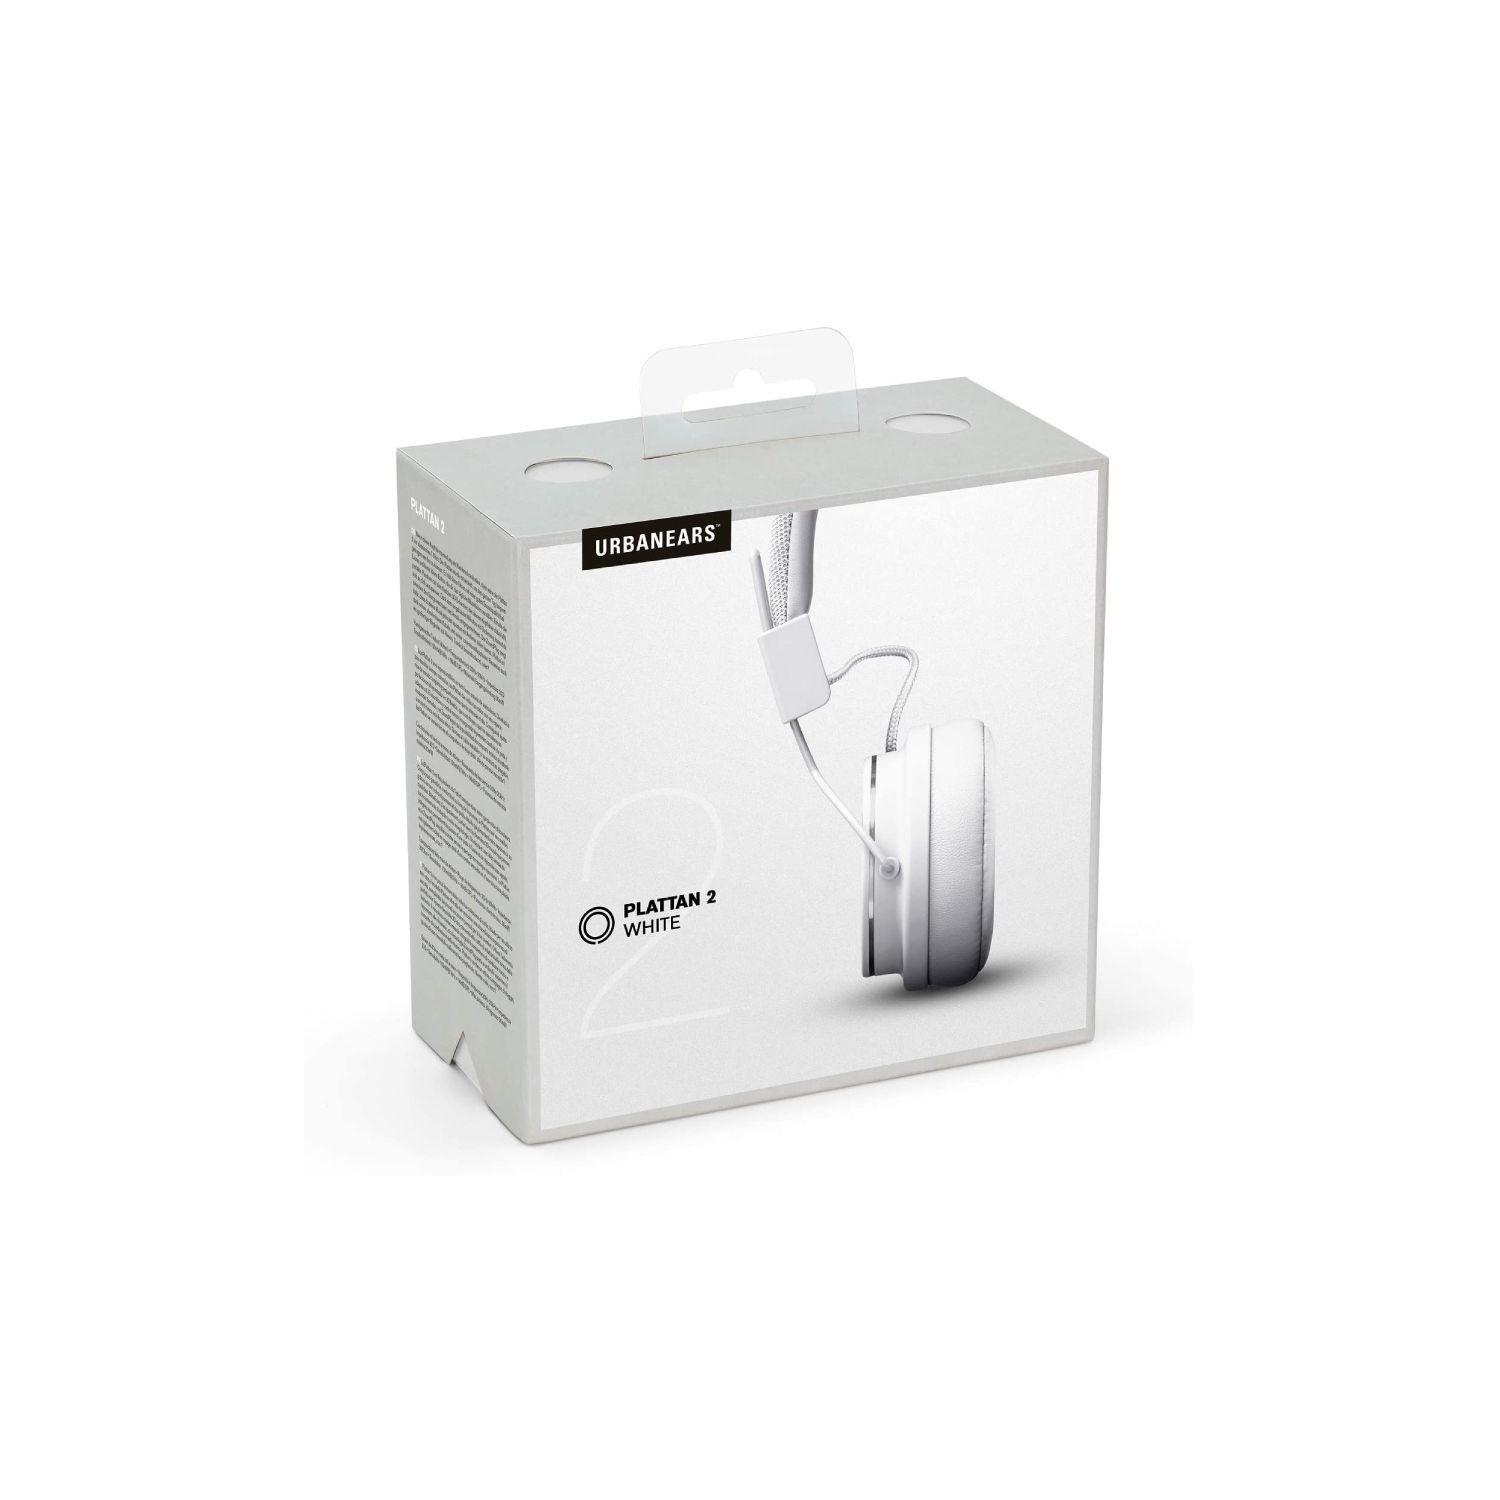 Urbanears Plattan 2 BT Headphones - True White